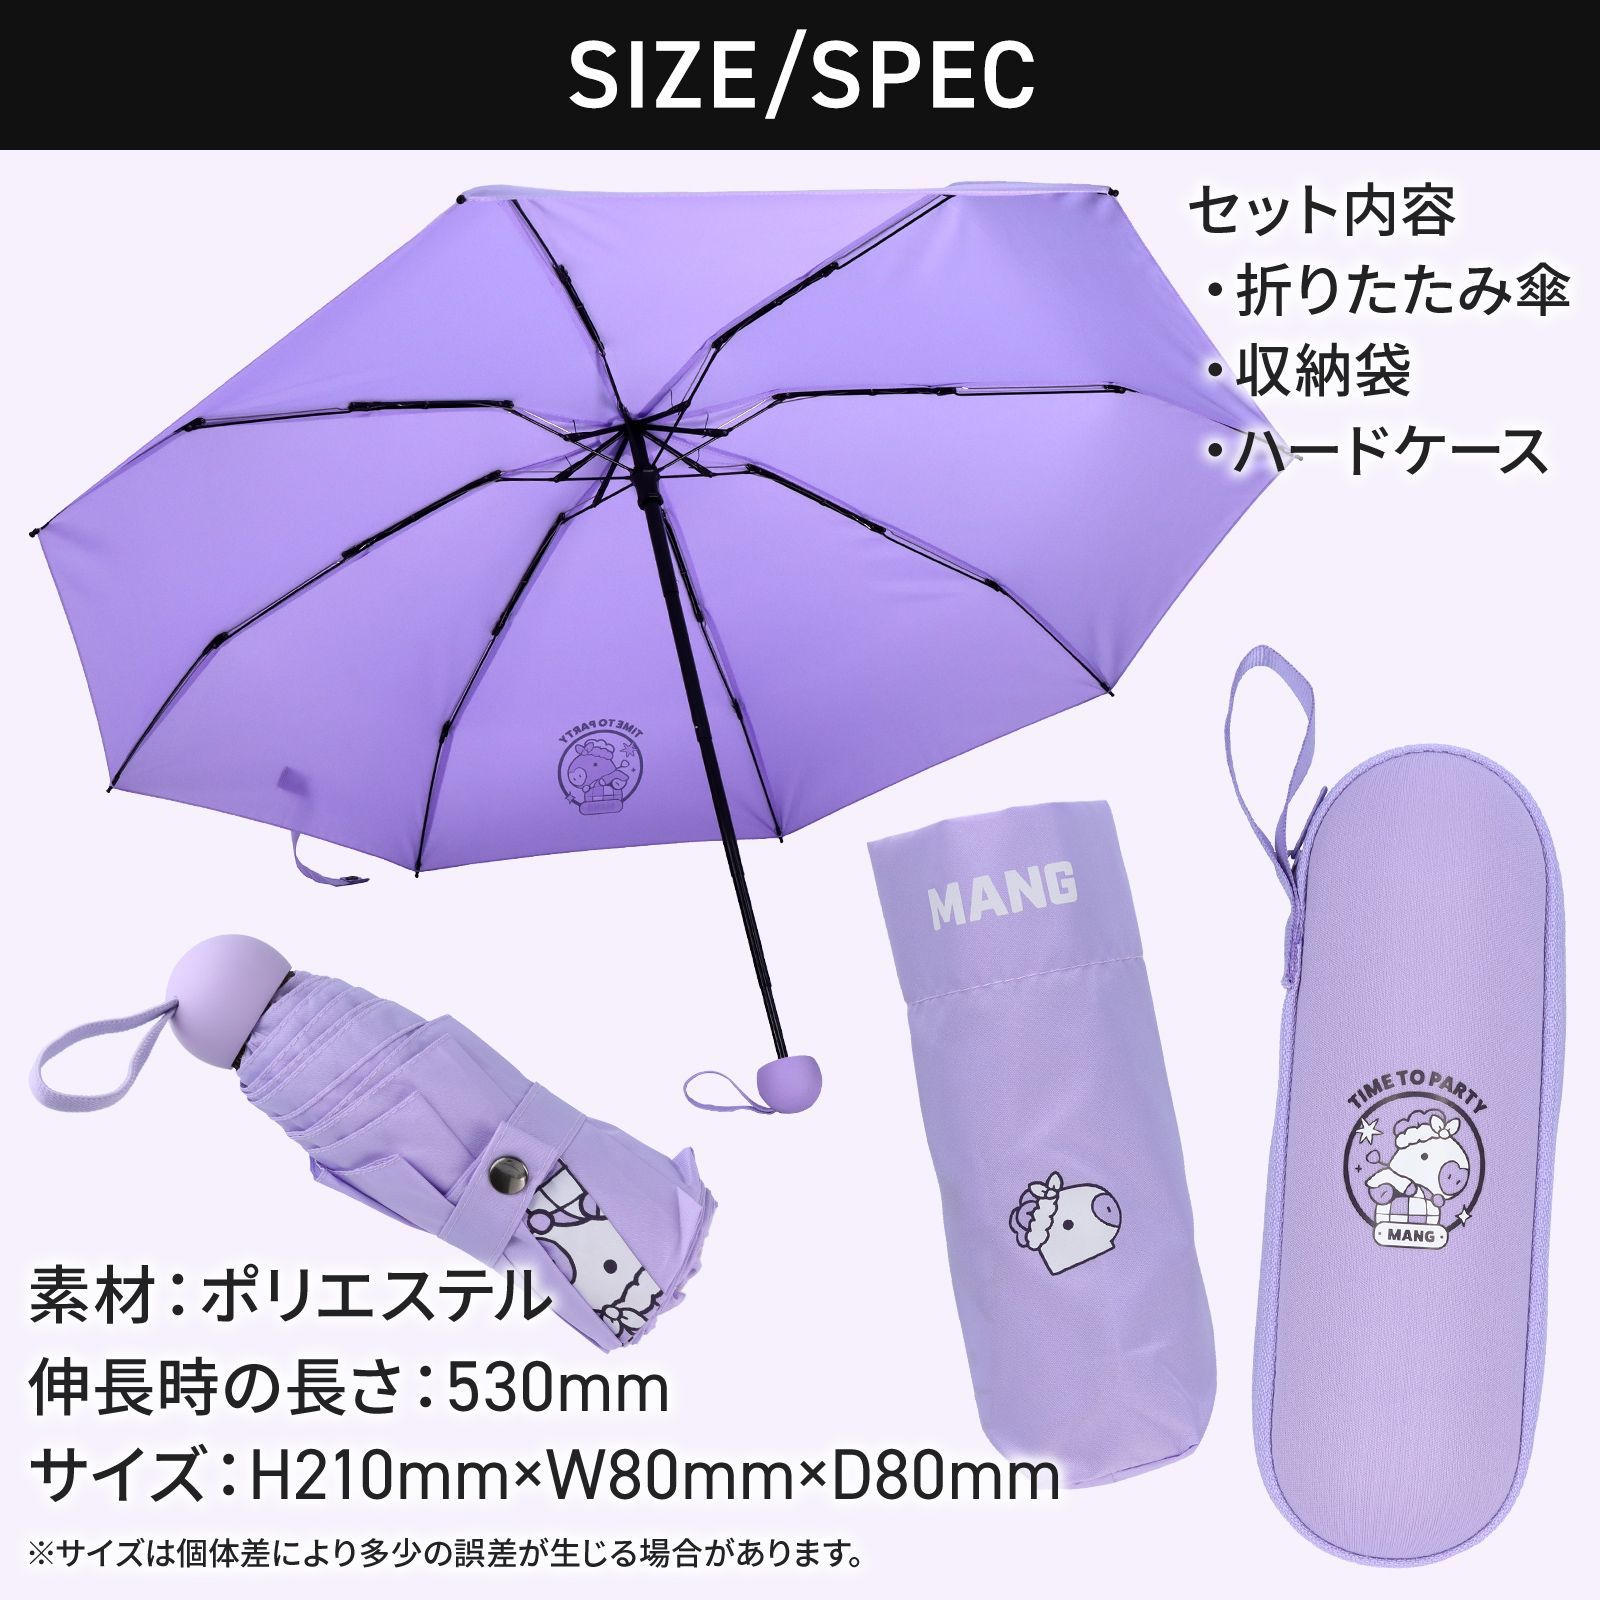 BT21 公式 グッズ 折り畳み傘 MANG マン 紫 キャラクター デザイン